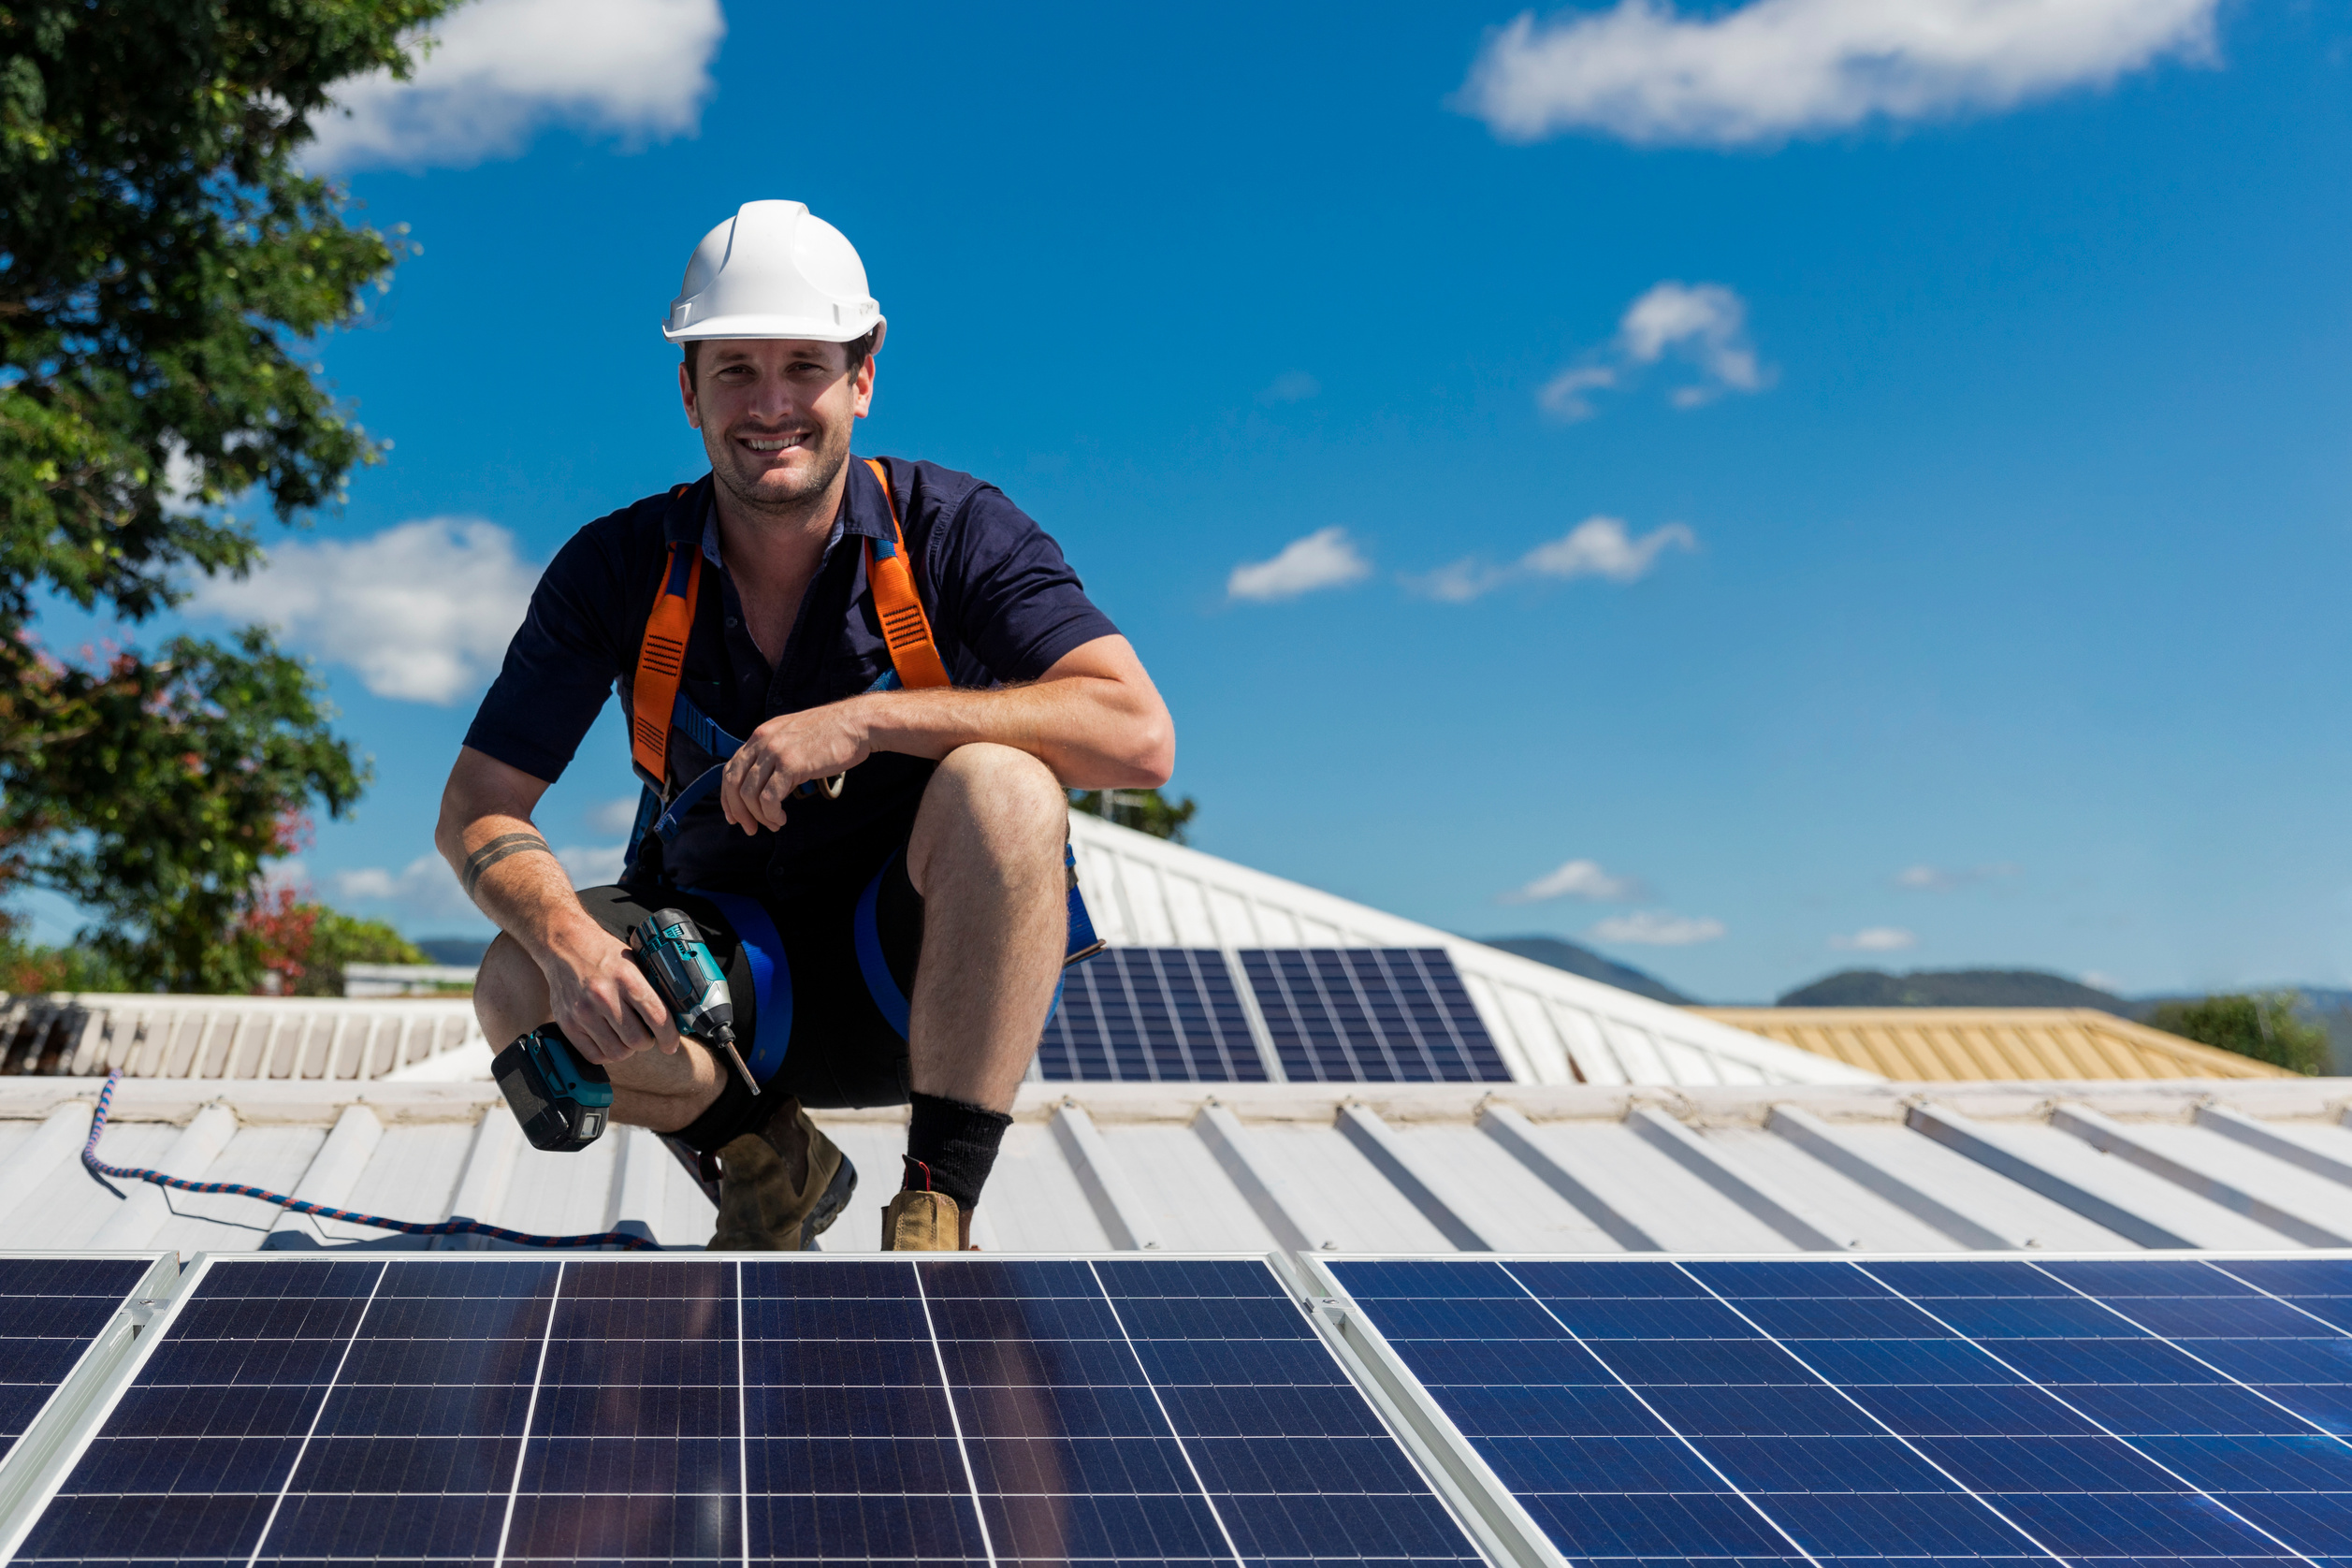 Solar Panel Technician with Drill Installing Solar Panels